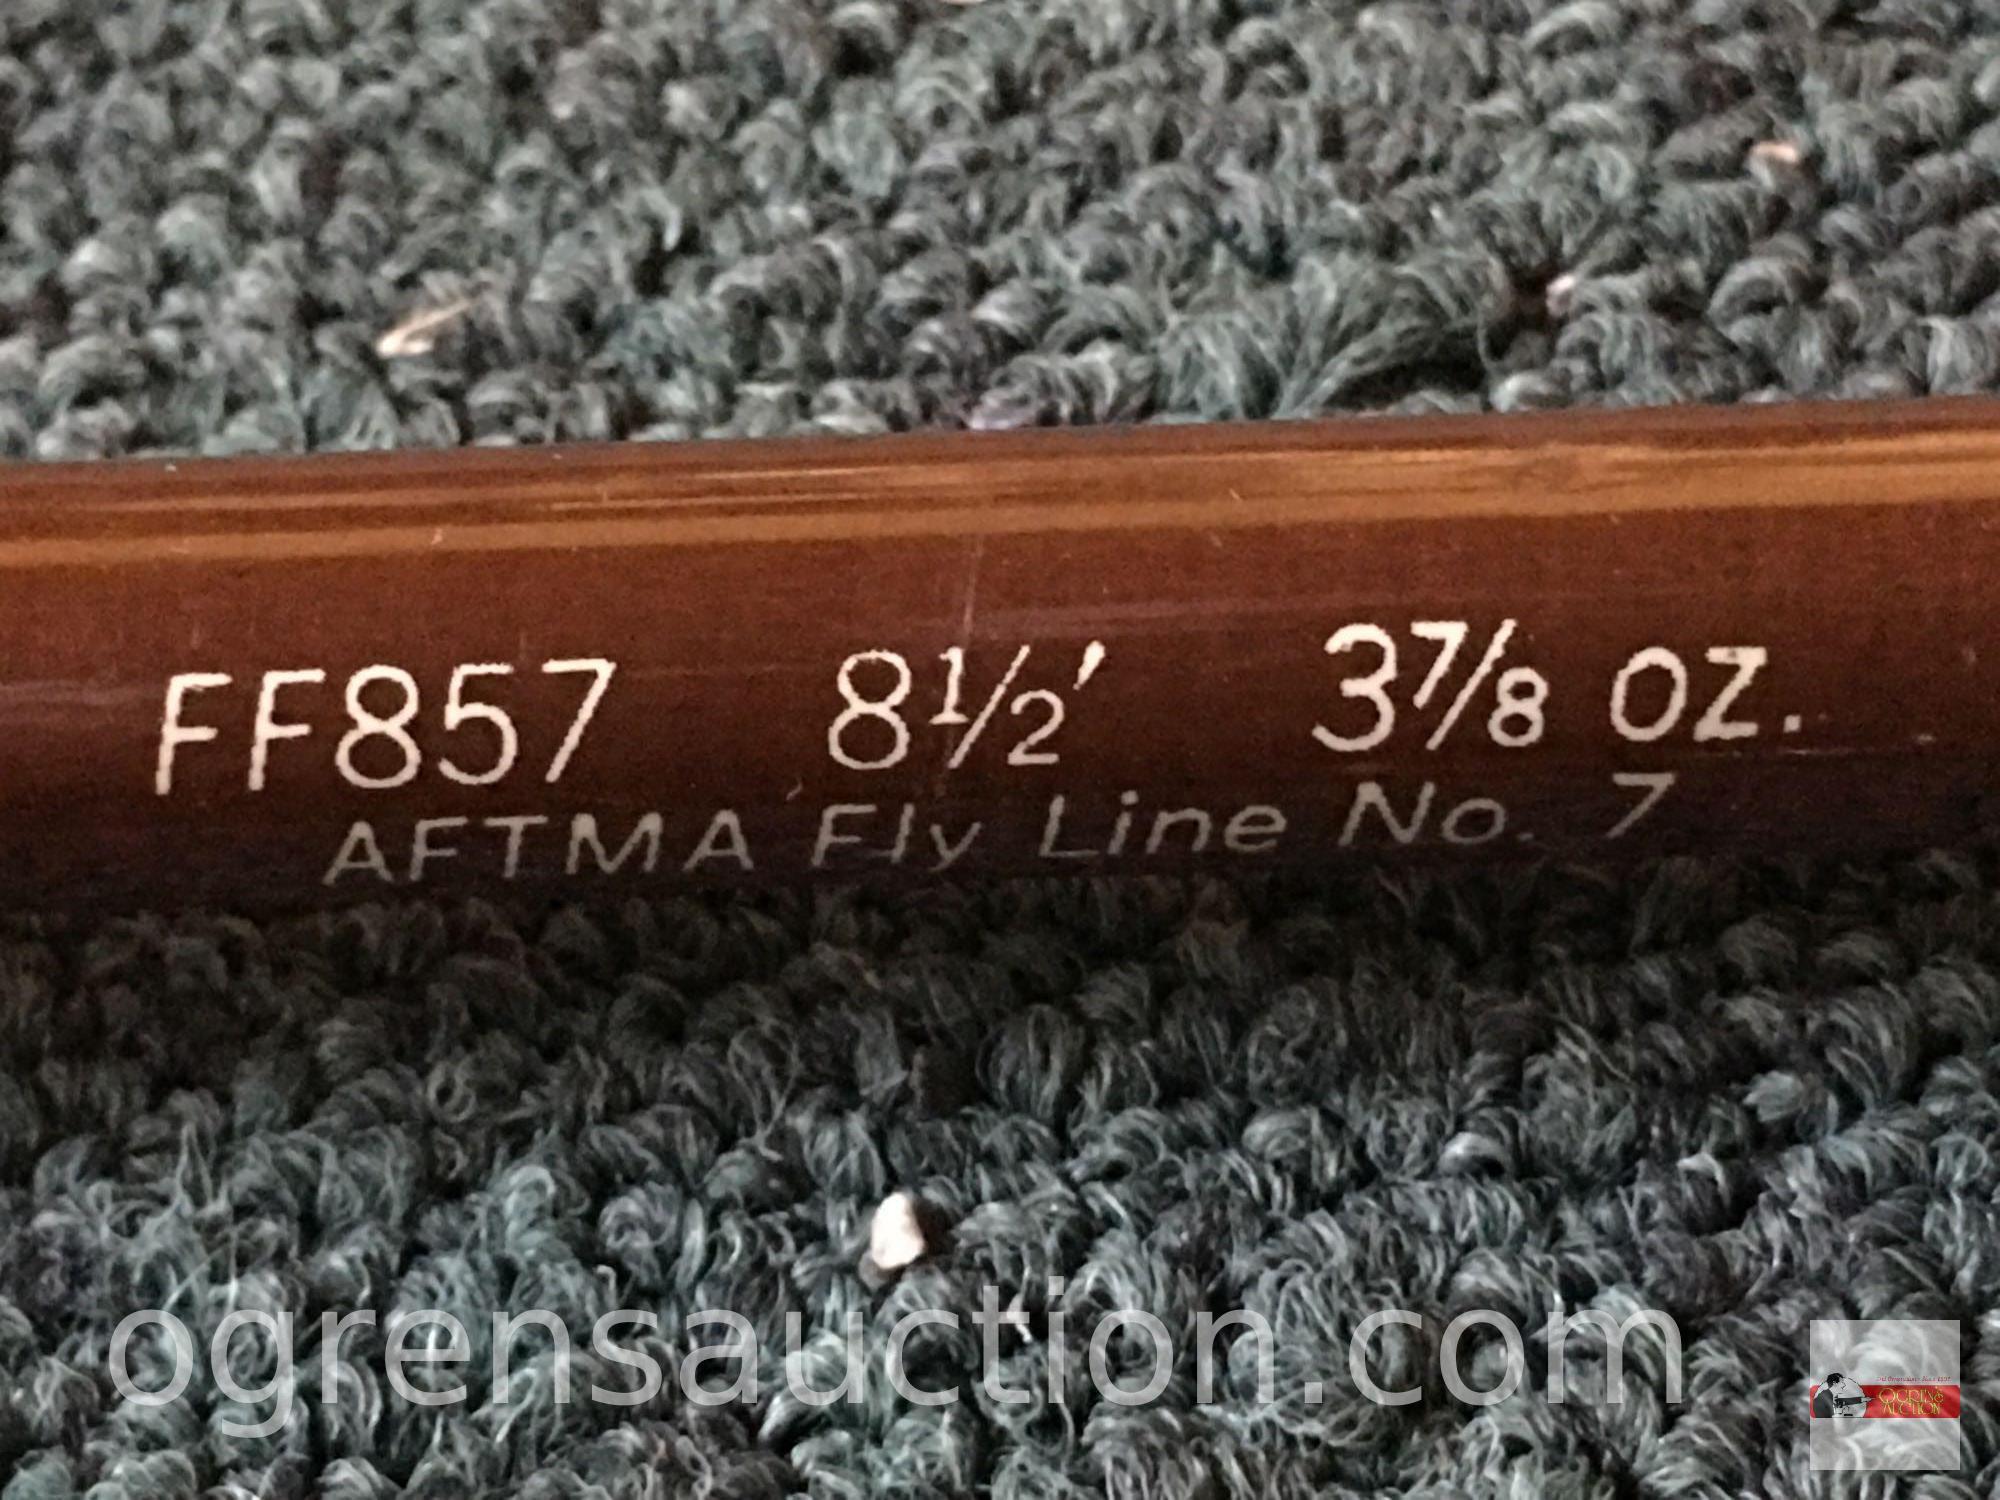 Fishing - Fly Rod - Fenwick 2 pc. Fiberglass Model #M 201136, 8'6" 3 7/8oz